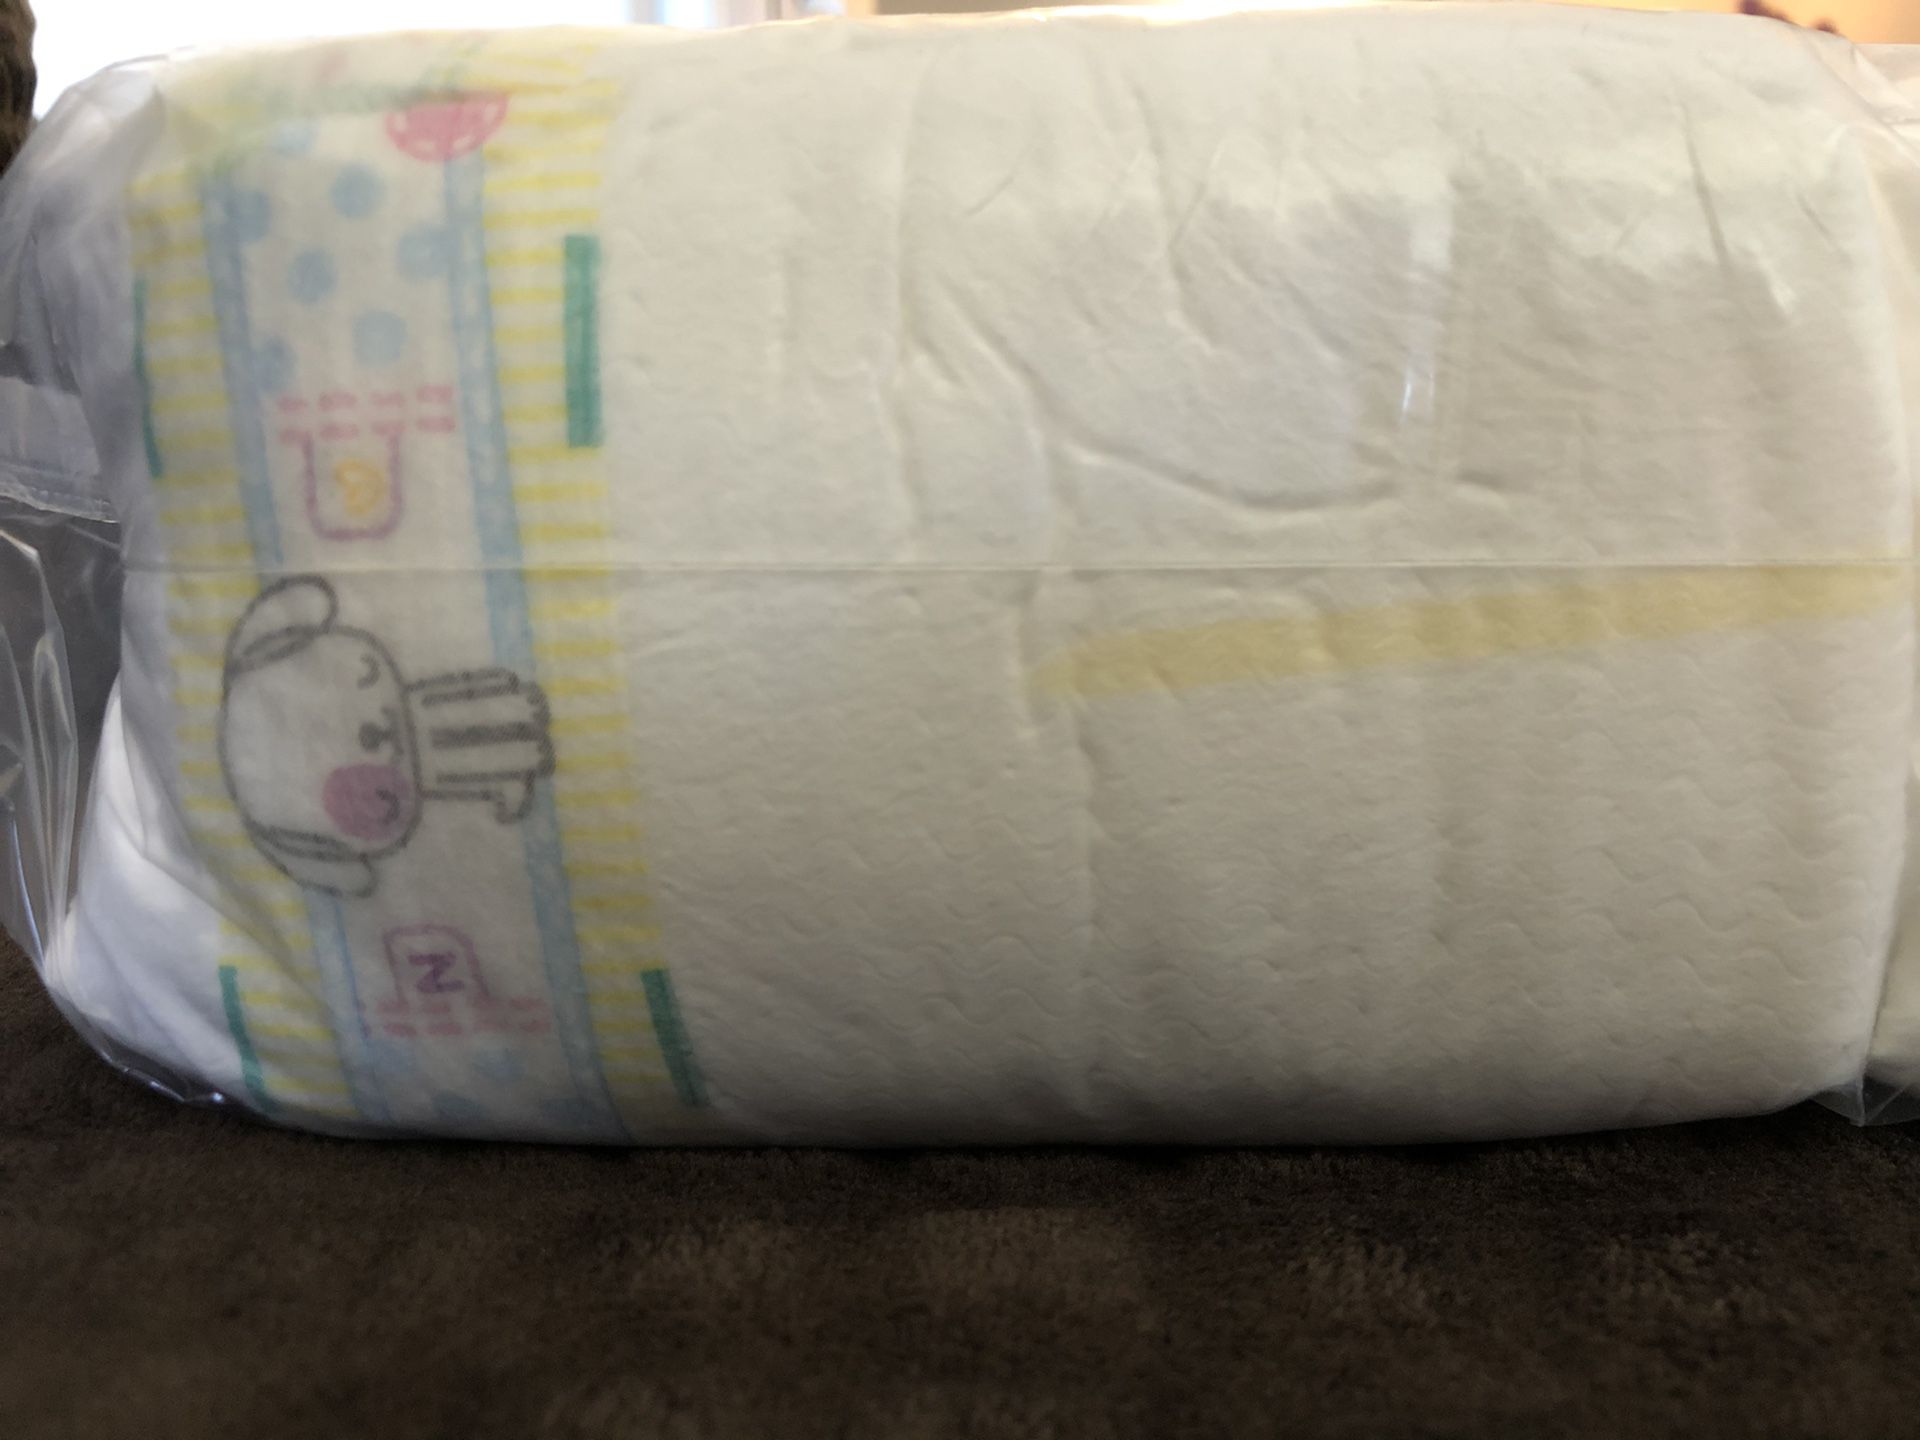 Pampers Newborn - 70 diapers - unopened